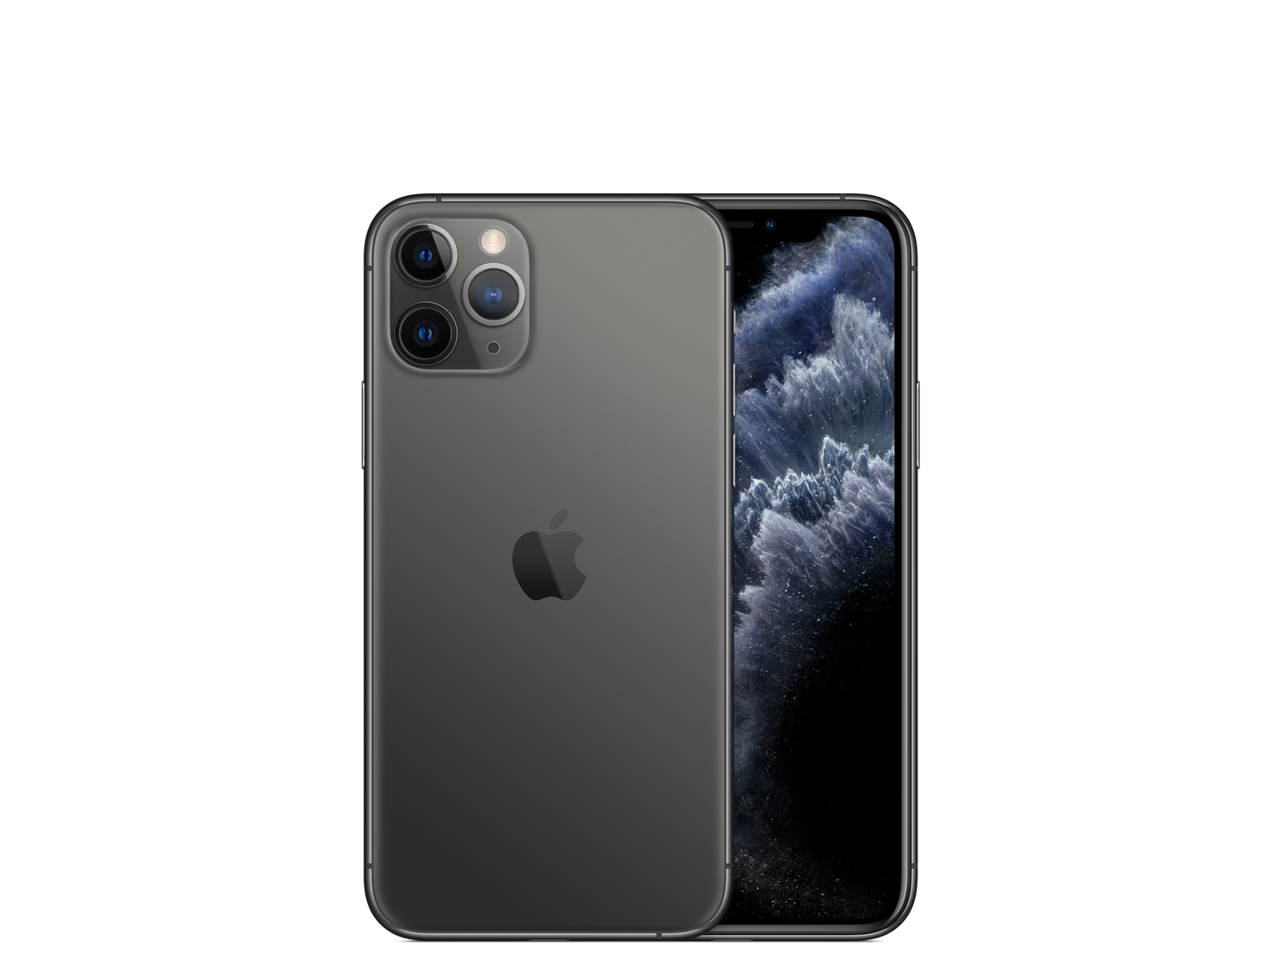 Apple - iPhone 11 Pro 64GB - Space Gray (Unlocked)